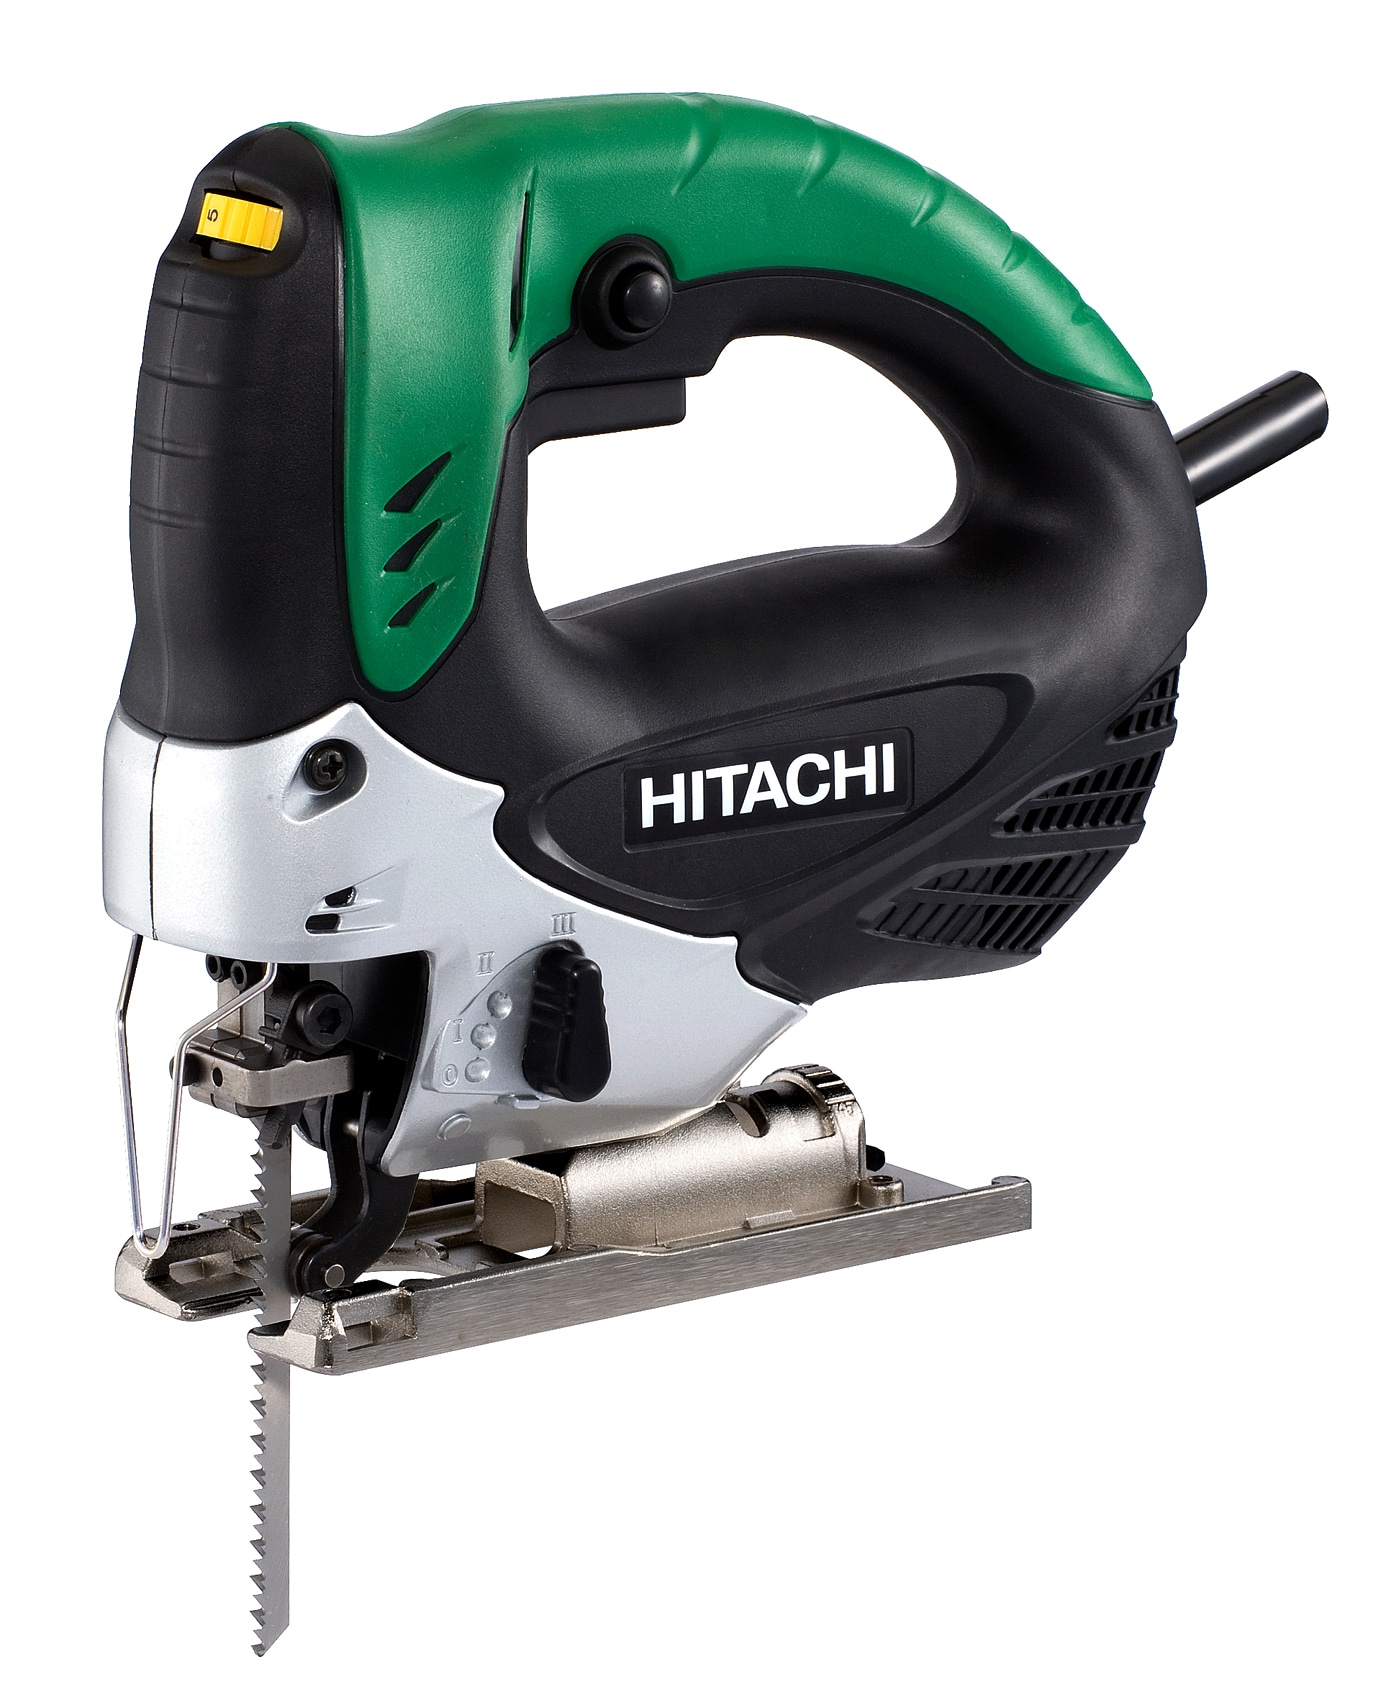 Hitachi Jig Saw Shop 1692089807